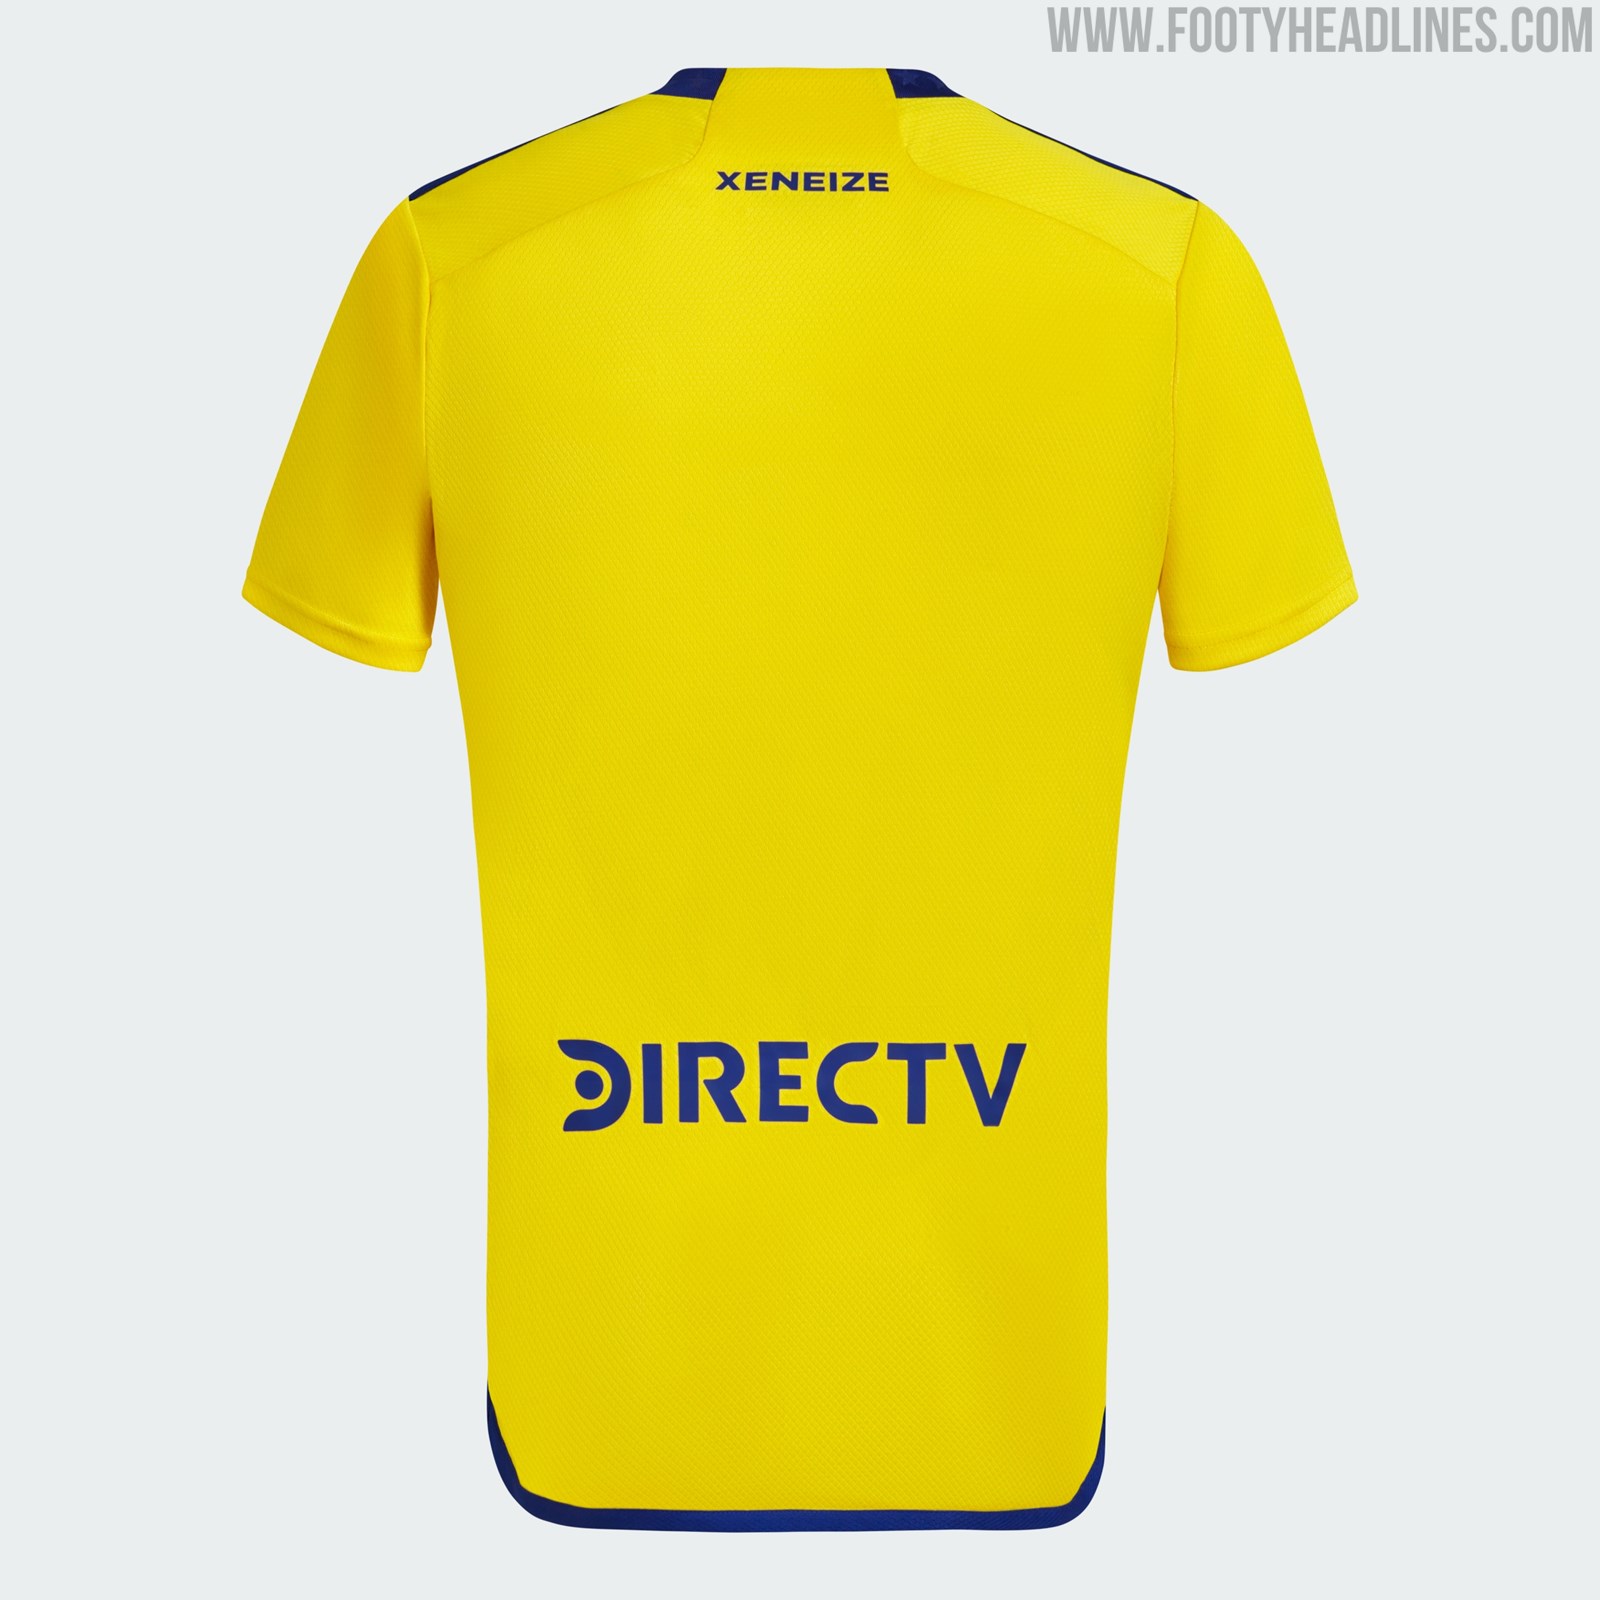 Boca Juniors 22/23 Away Shirt Officially Revealed Following Debut